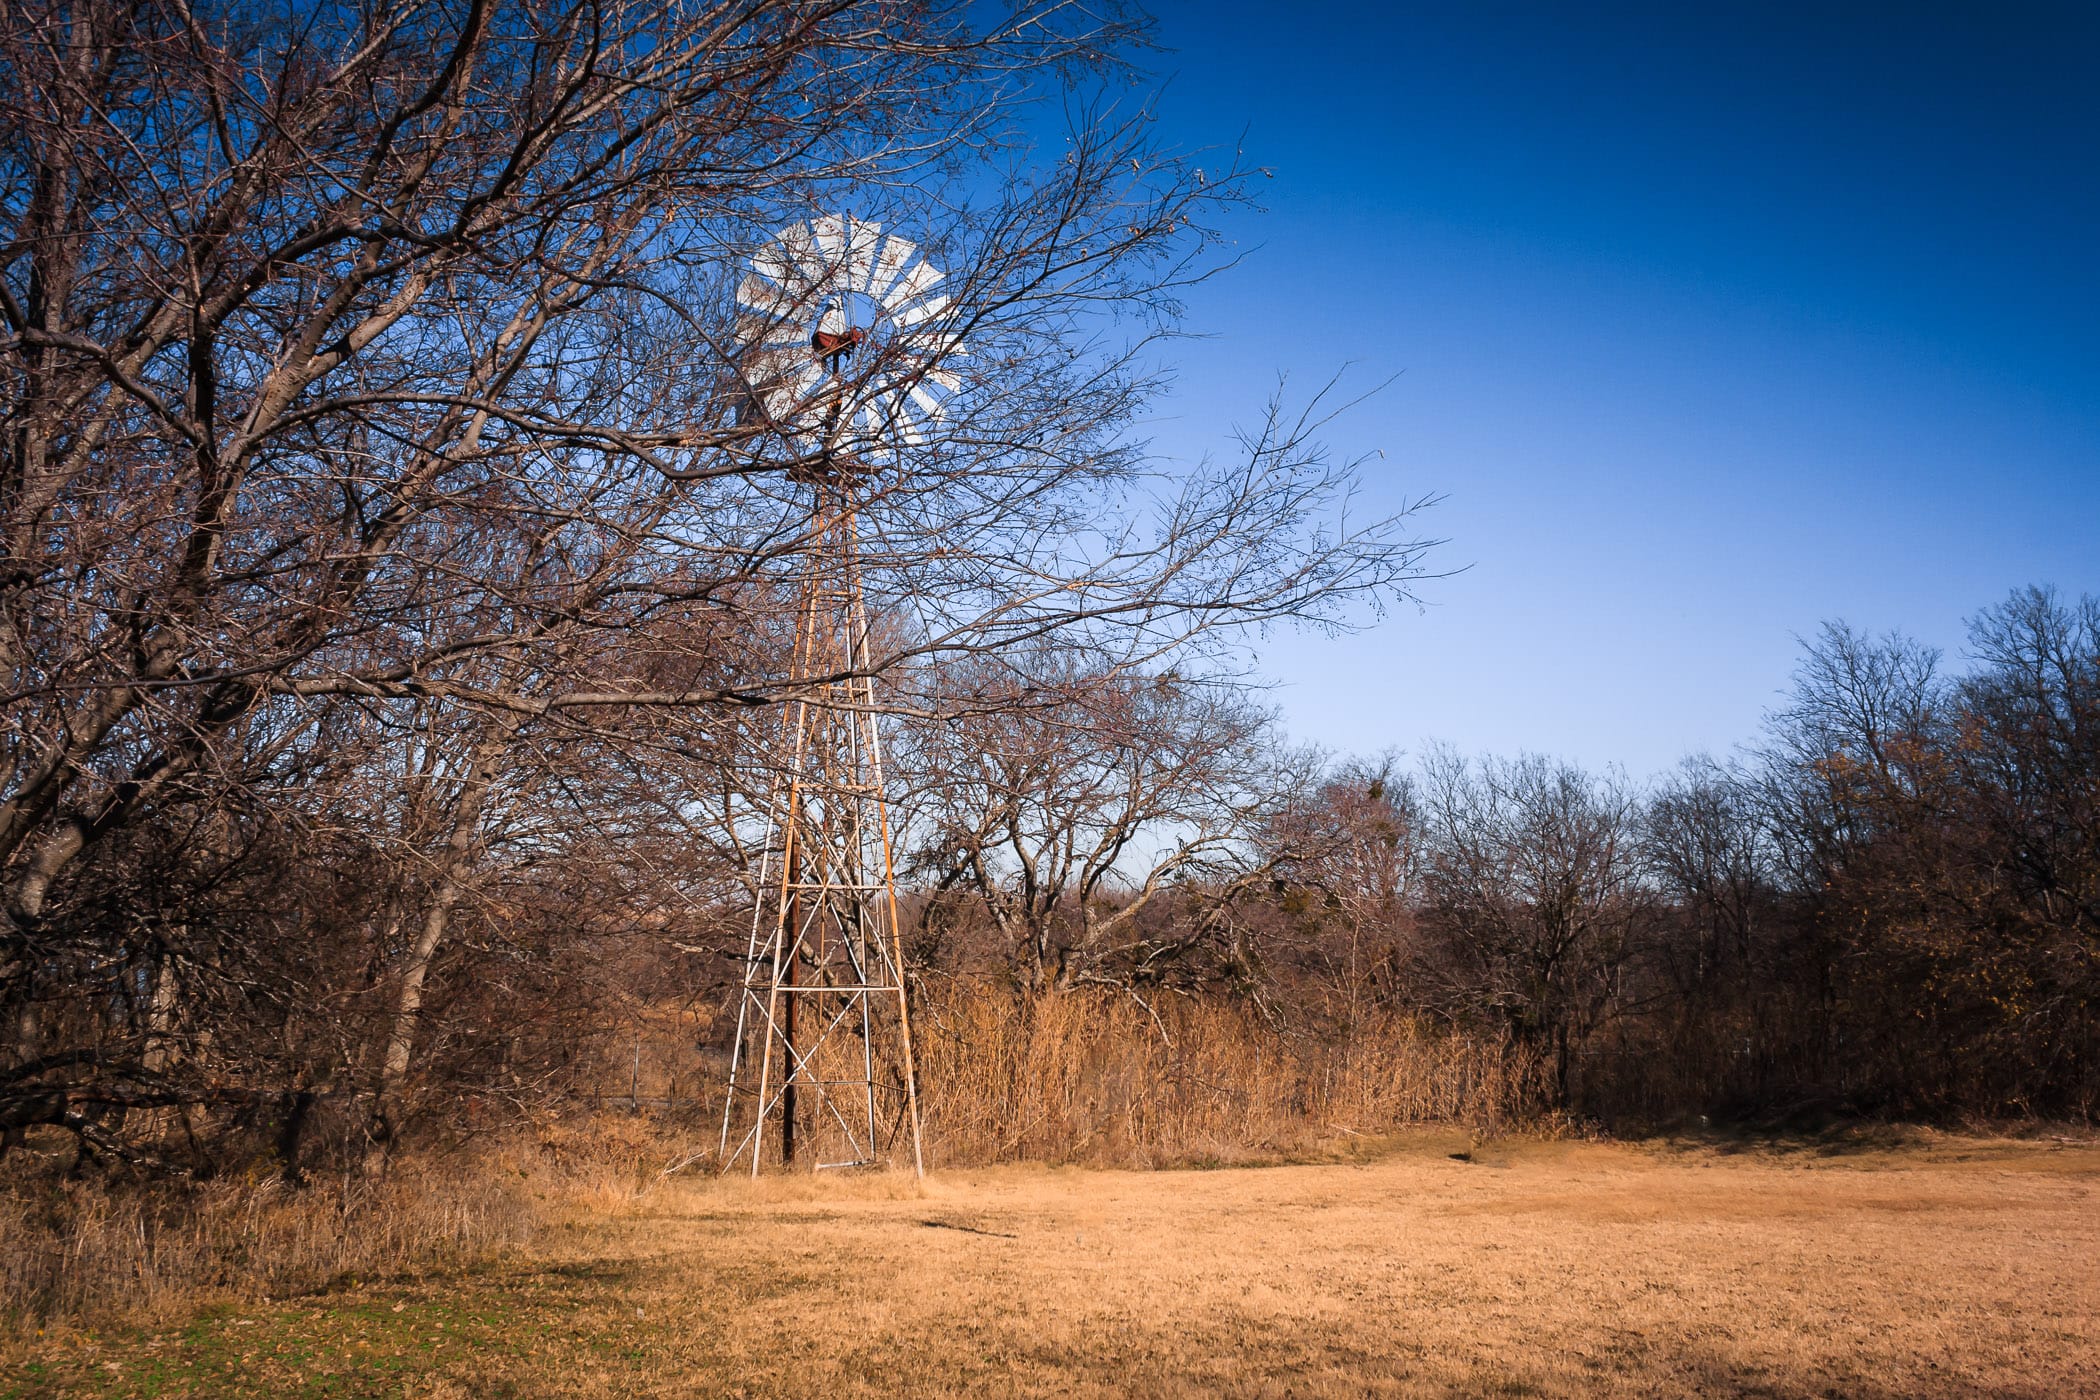 One of the windmills at Penn Farm in Cedar Hill State Park, Texas.